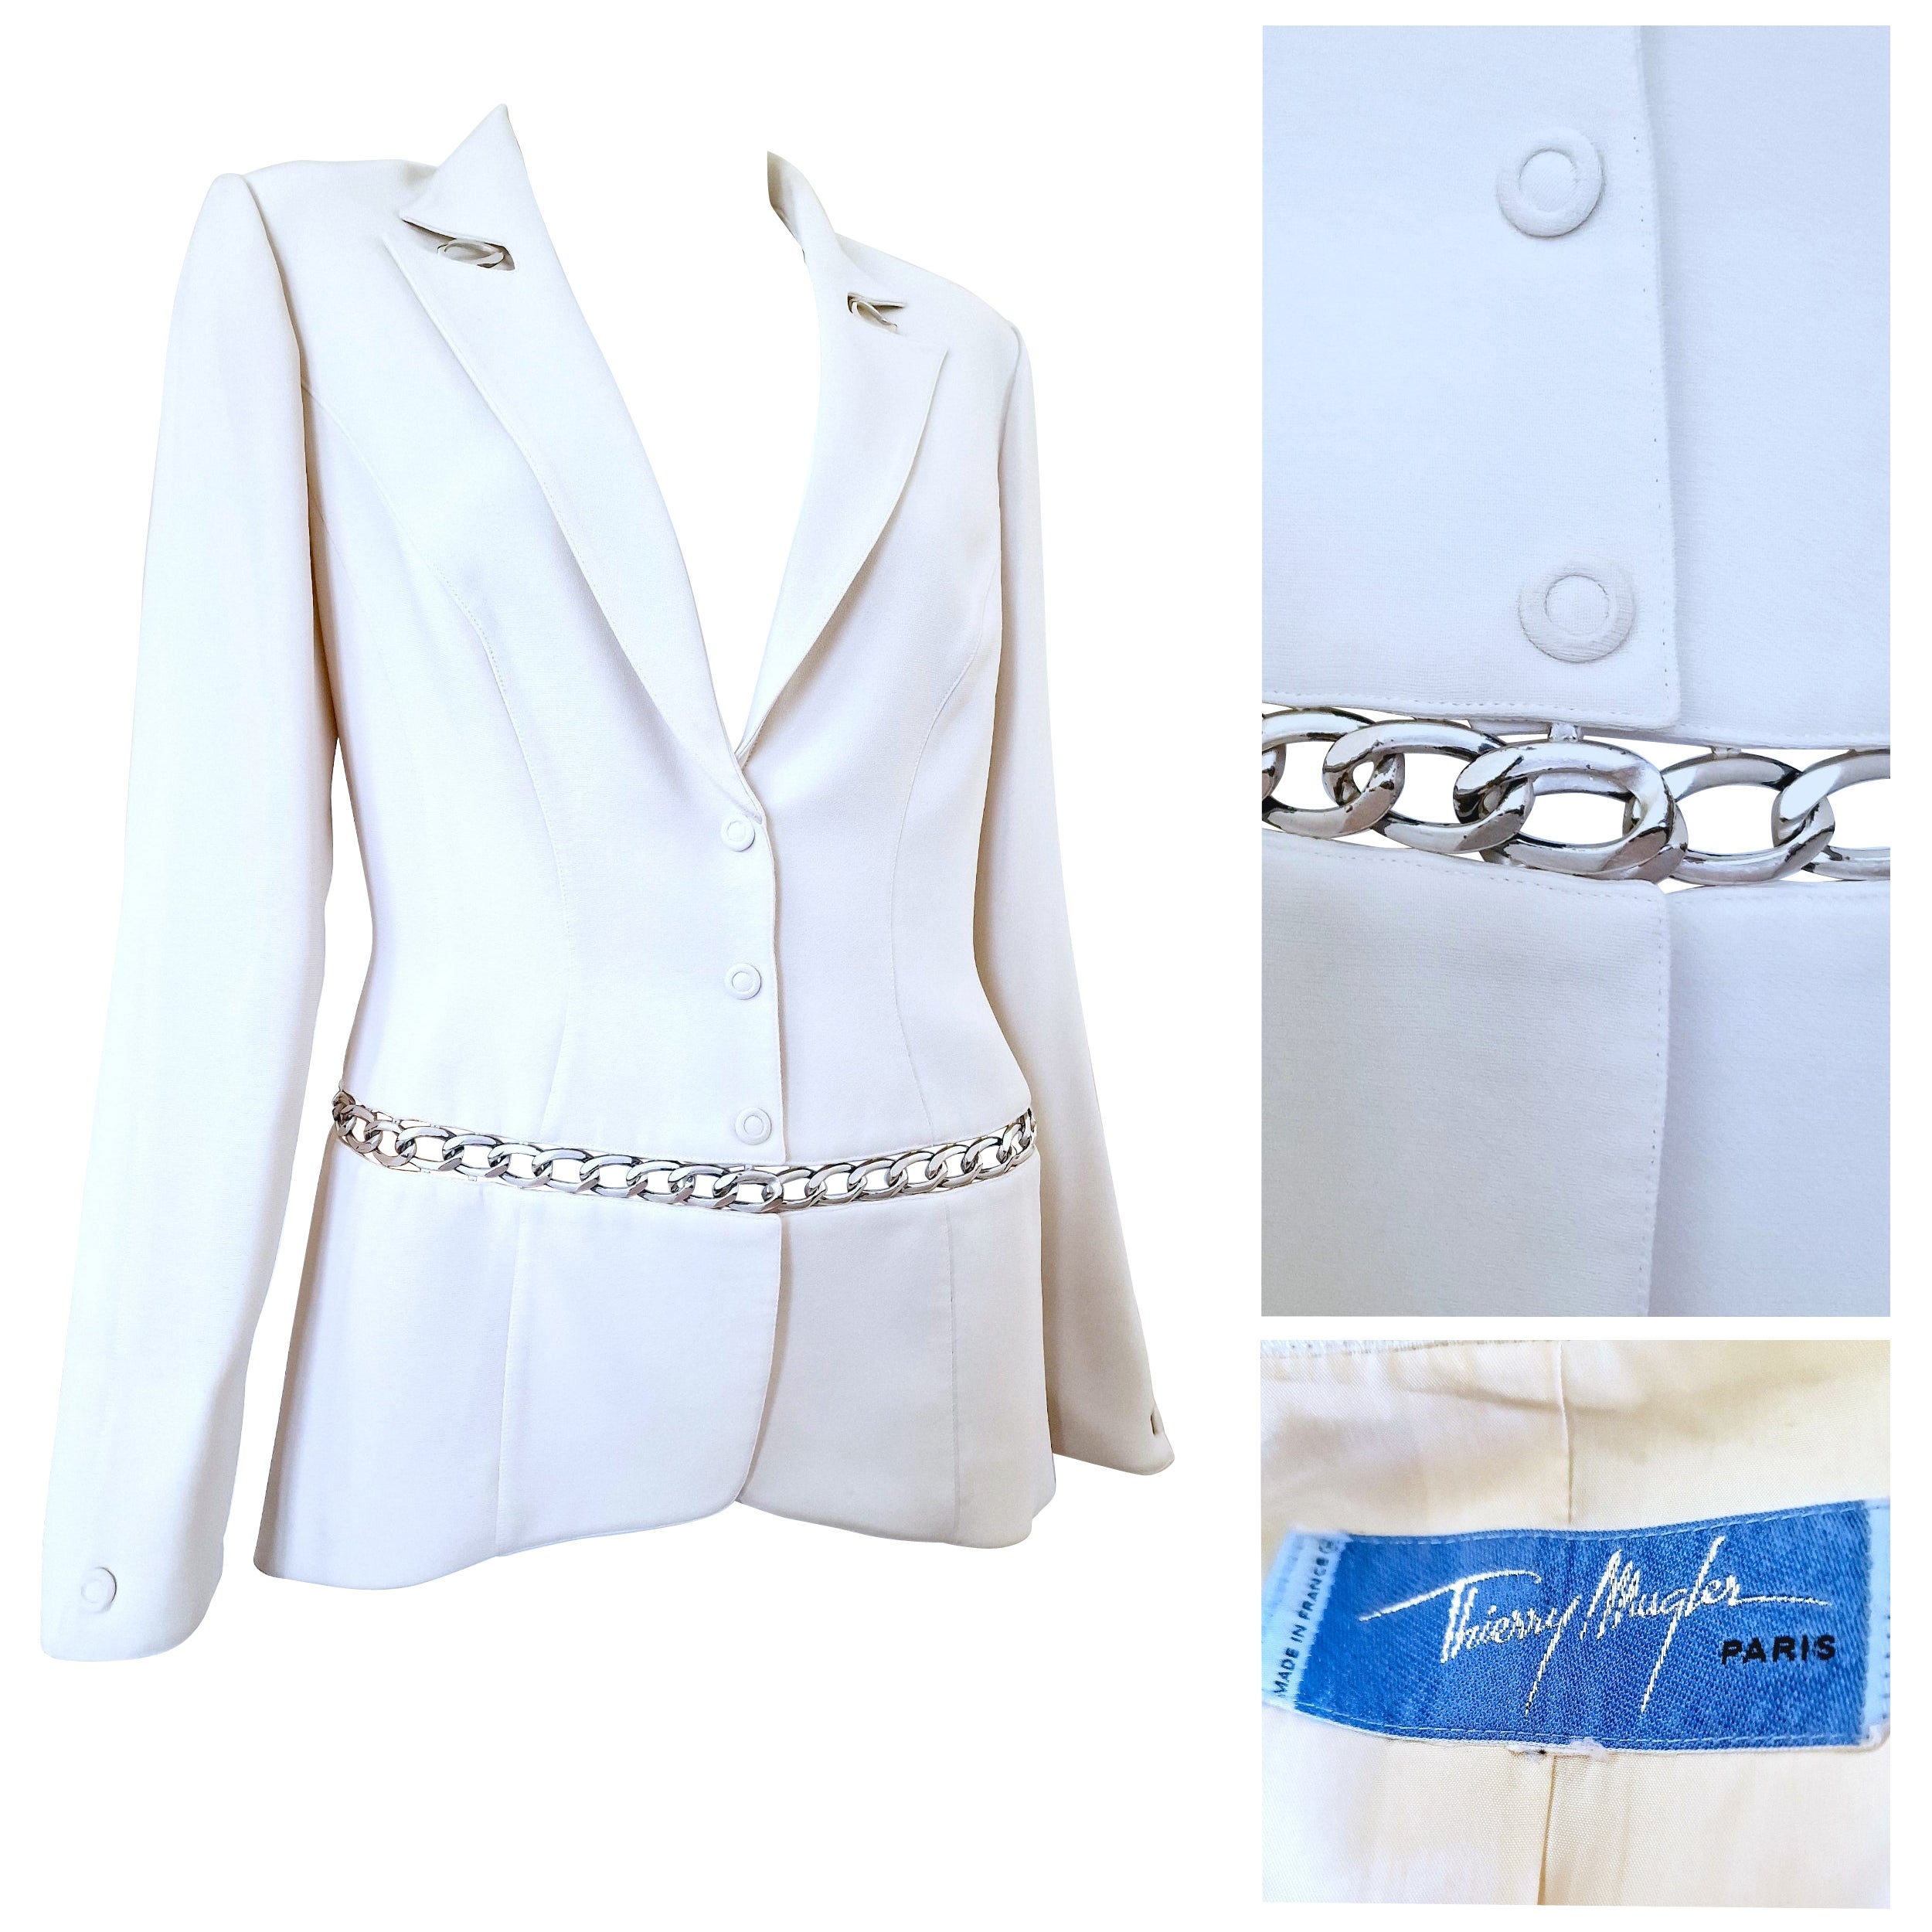 Thierry Mugler Chain Runway Evening Couture White Wasp Waist Large Blazer Jacket